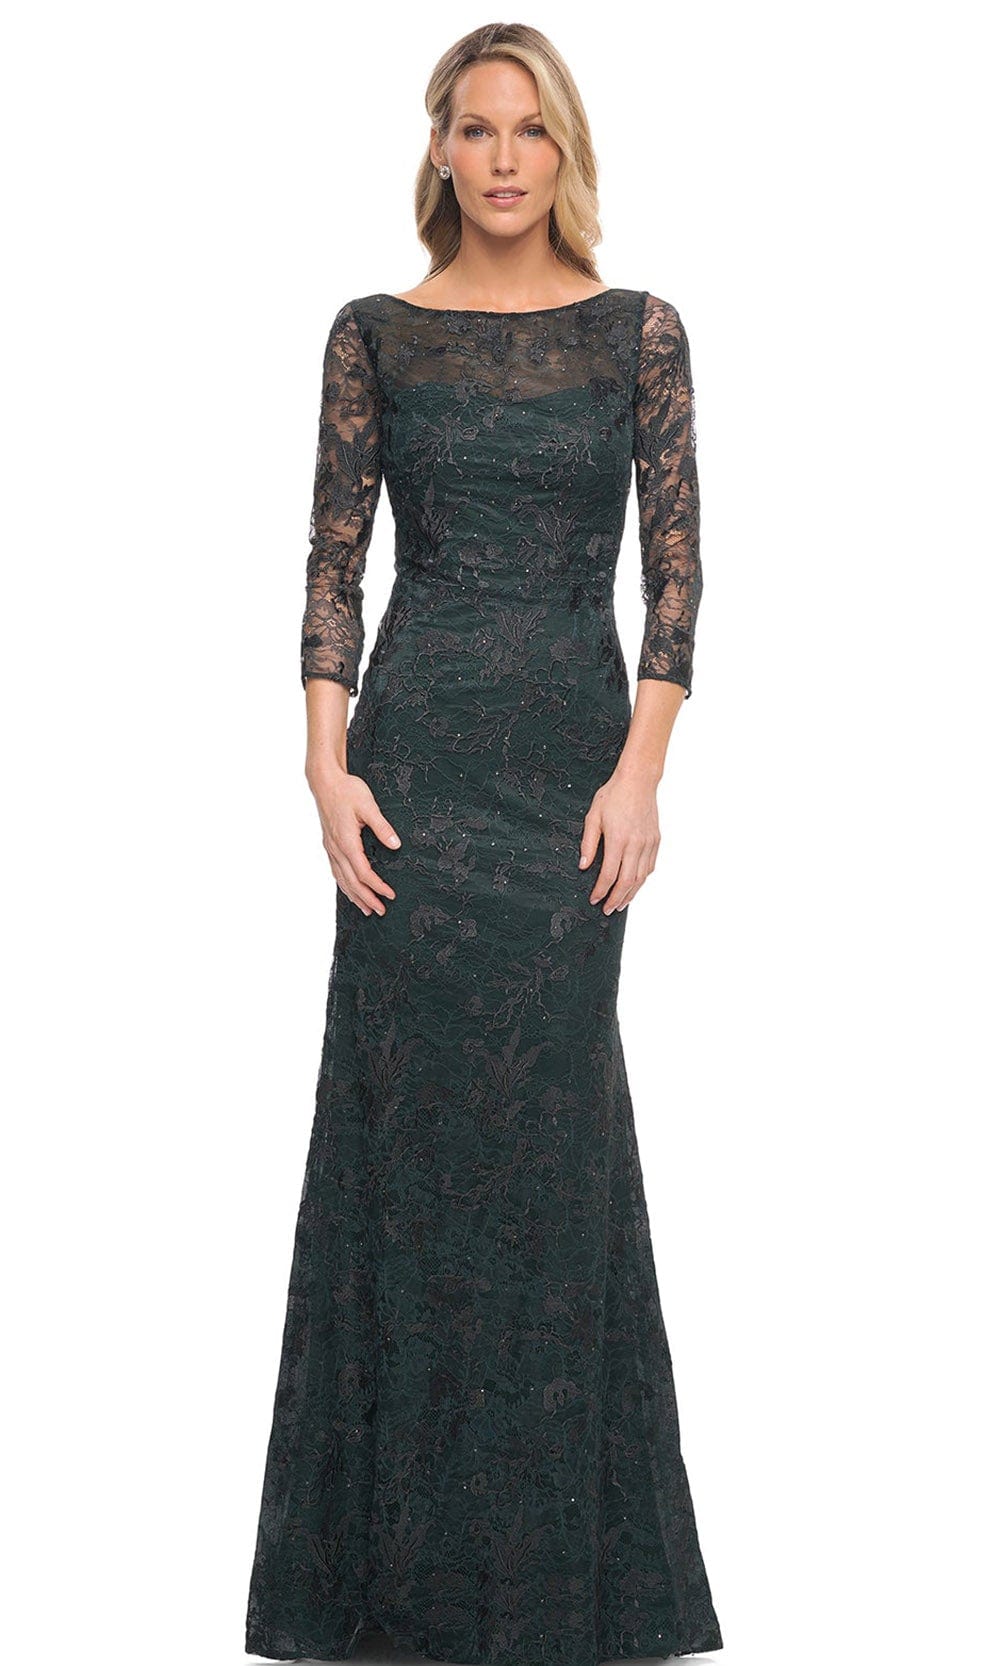 Image of La Femme 30317 - Sheer Lace Dress